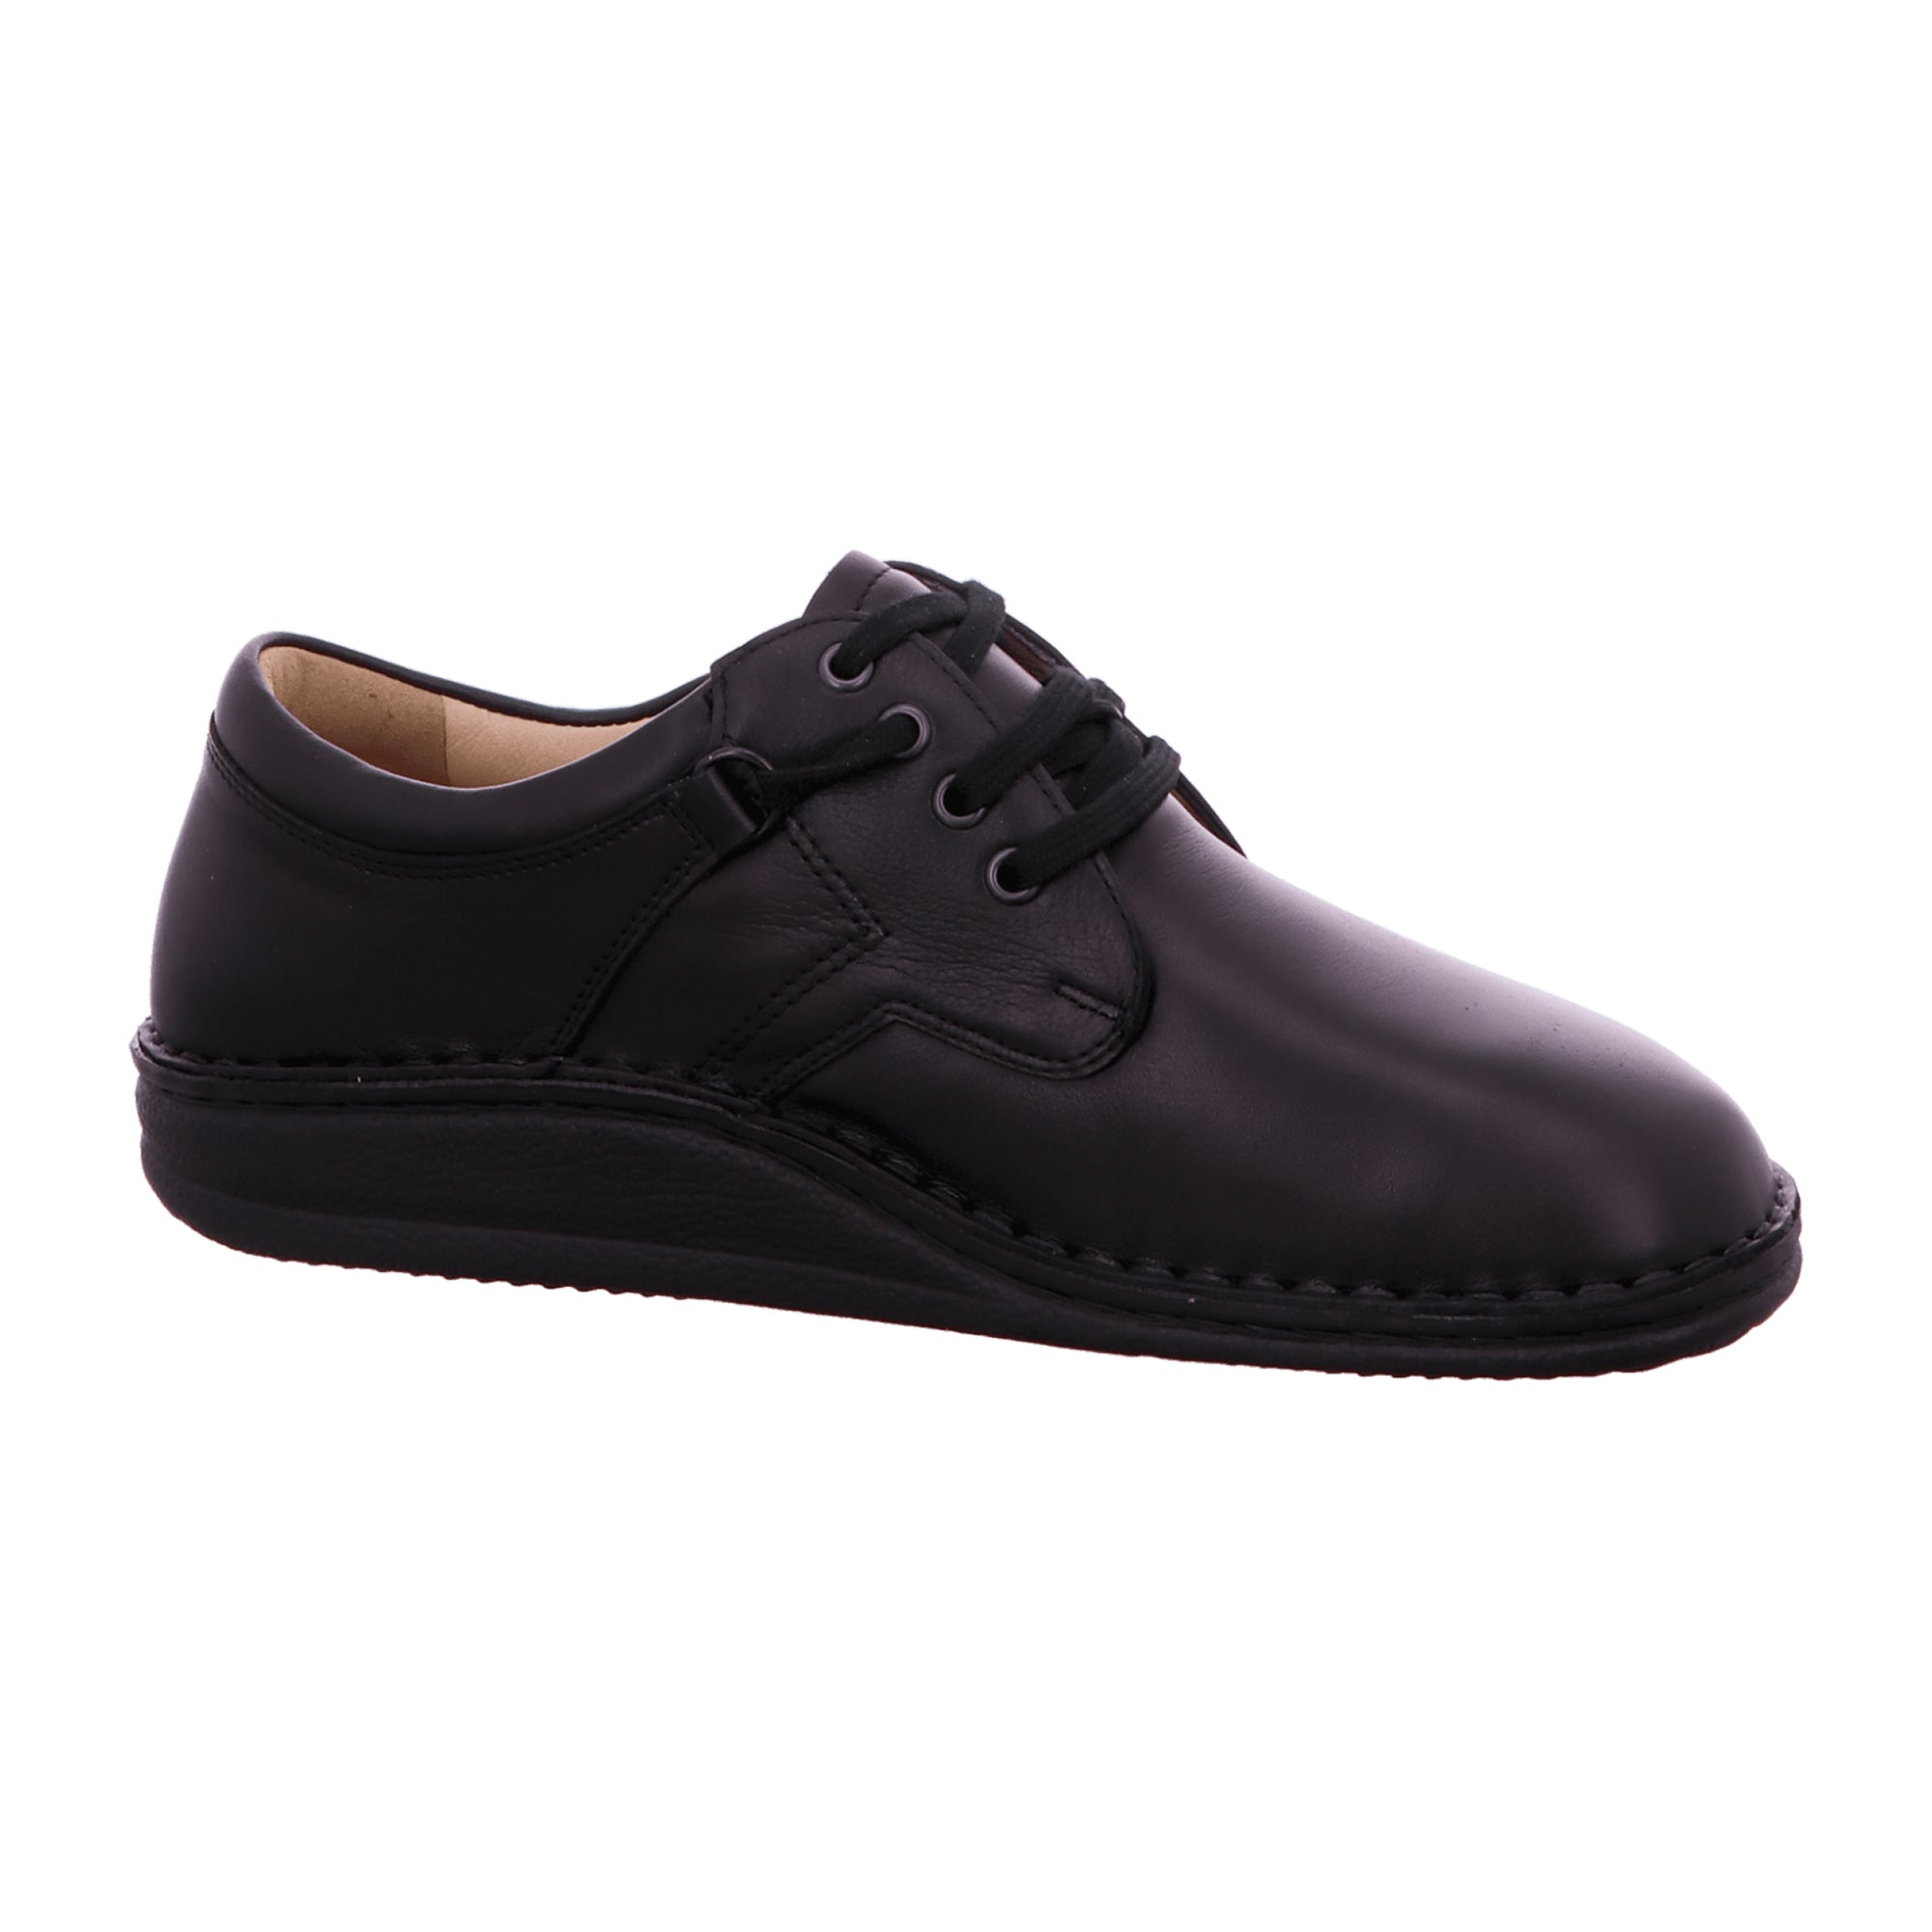 Finn Comfort Men's Therapeutic Black Shoes - Durable & Stylish